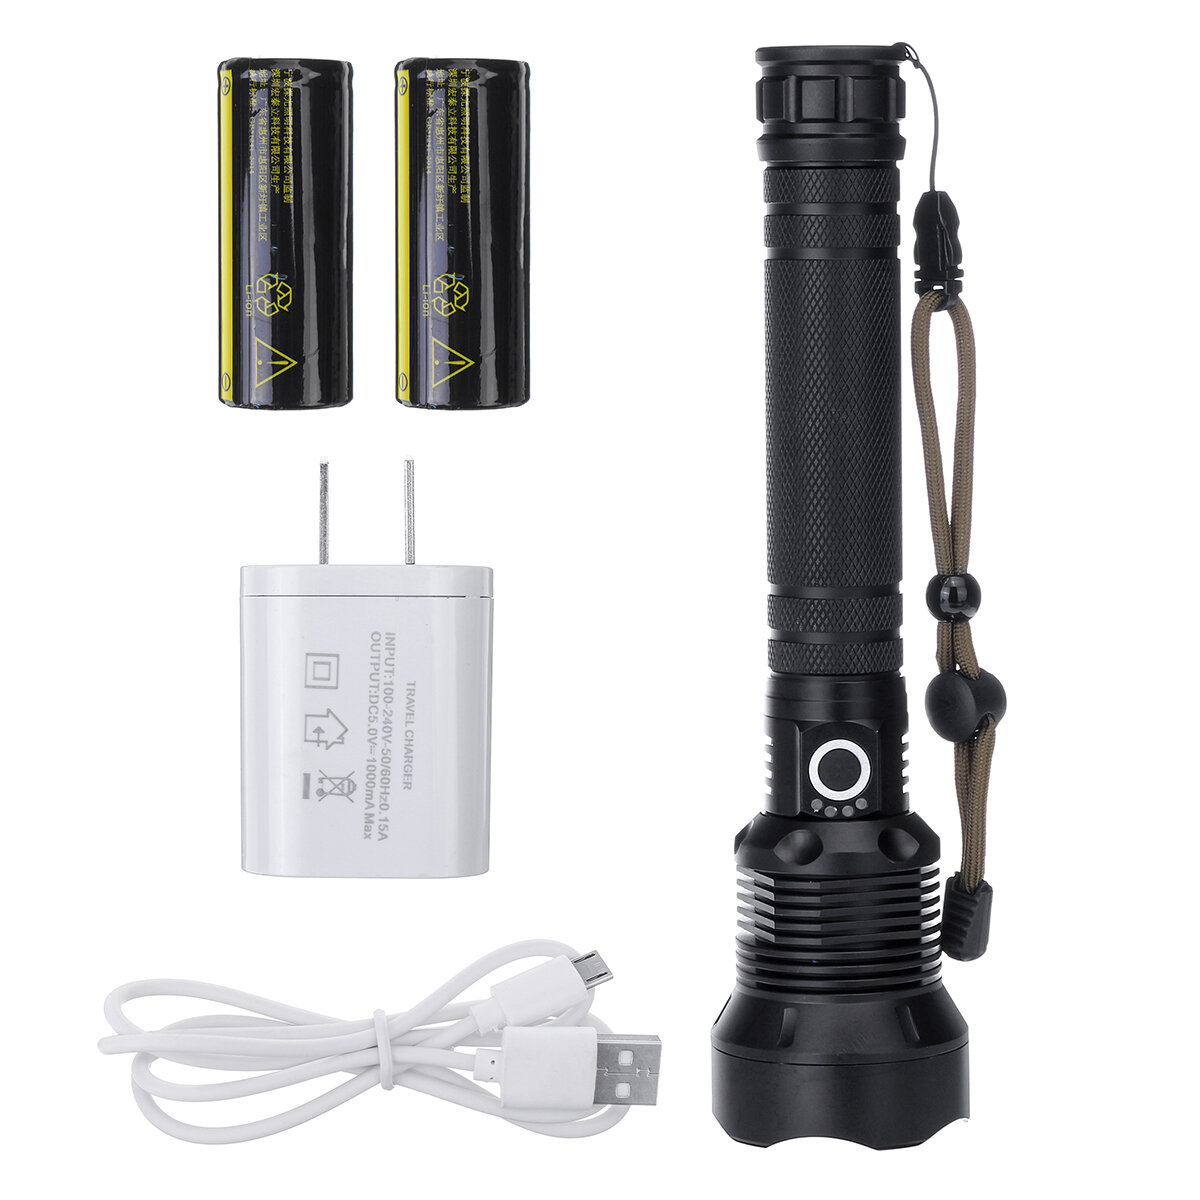 

XANES P50 70W Flashlight 5 Modes EU/UK/US Plug Charging 5 Modes Torch Light Hunting Camping Work Lamp